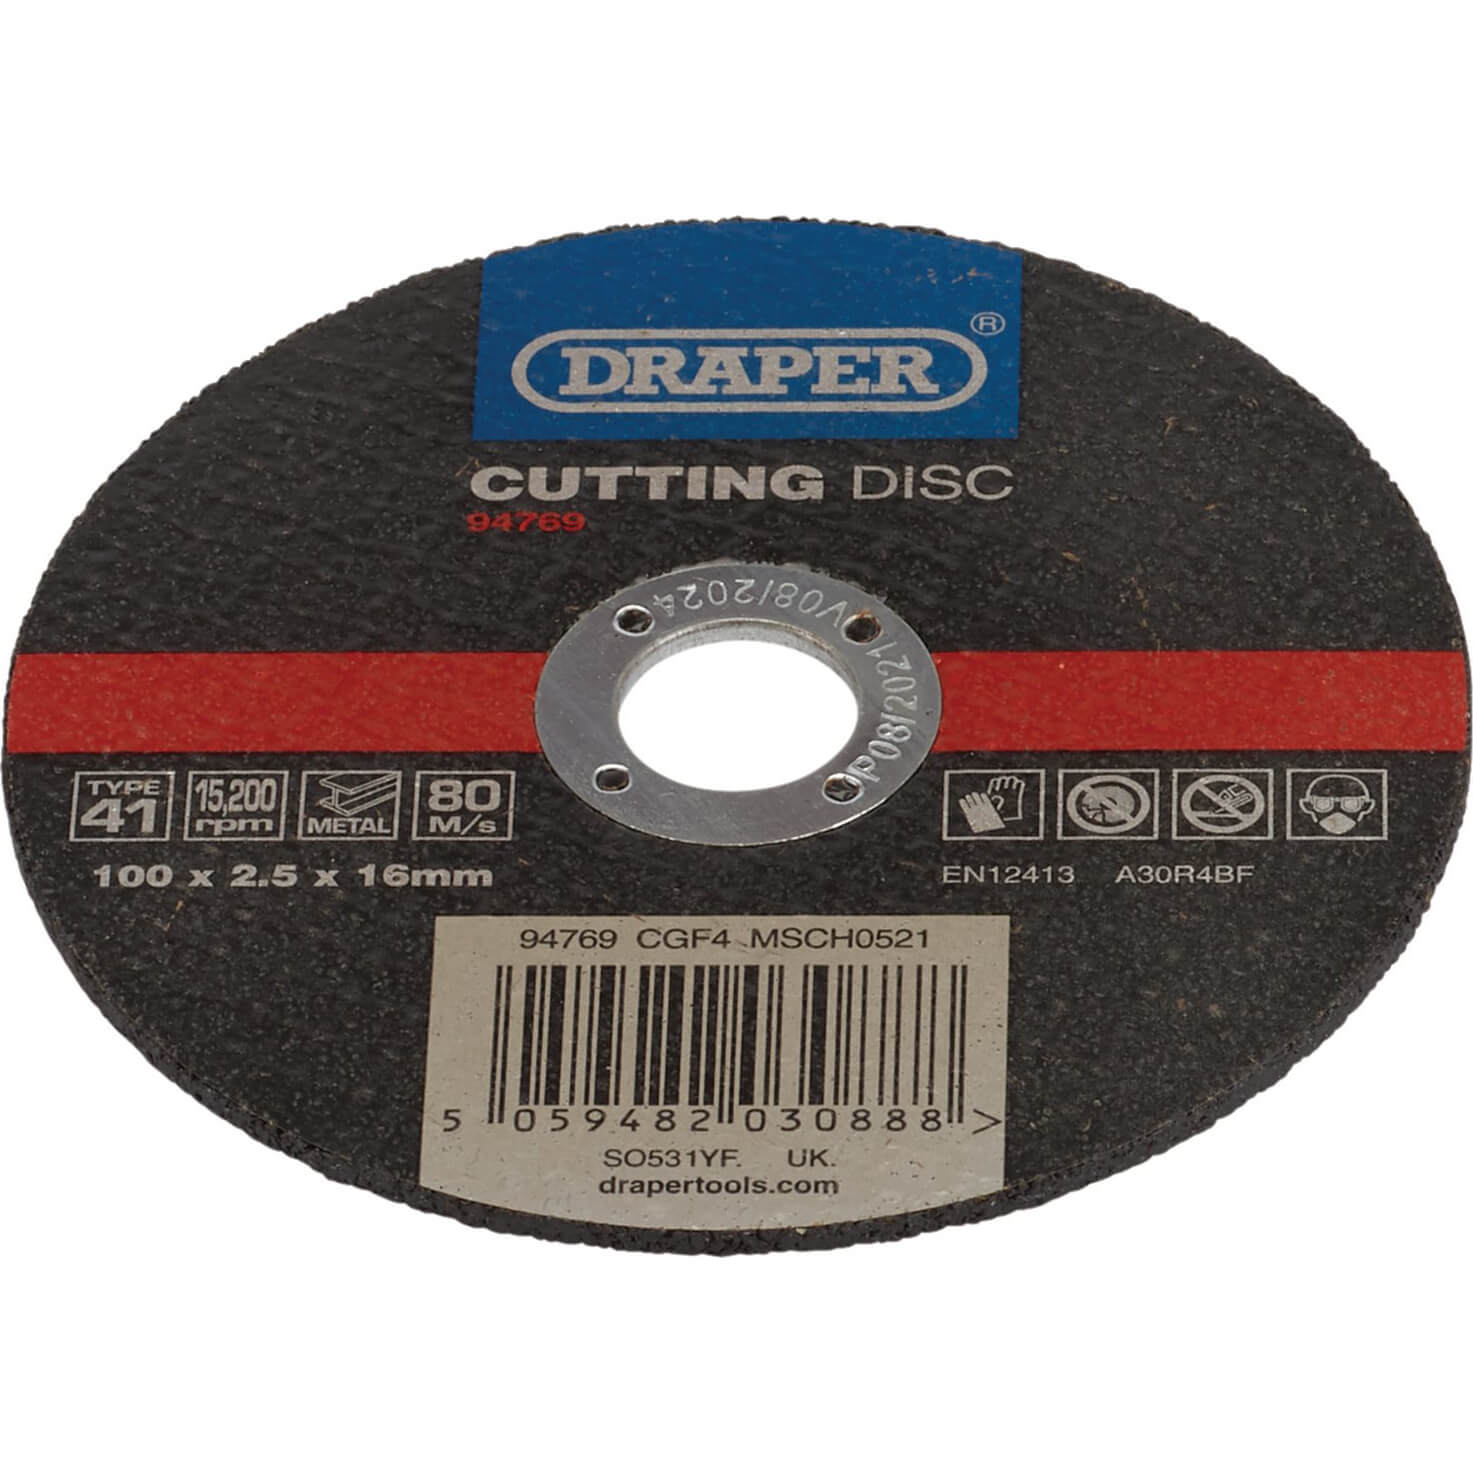 Image of Draper Metal Cutting Disc 100mm 2.5mm 16mm